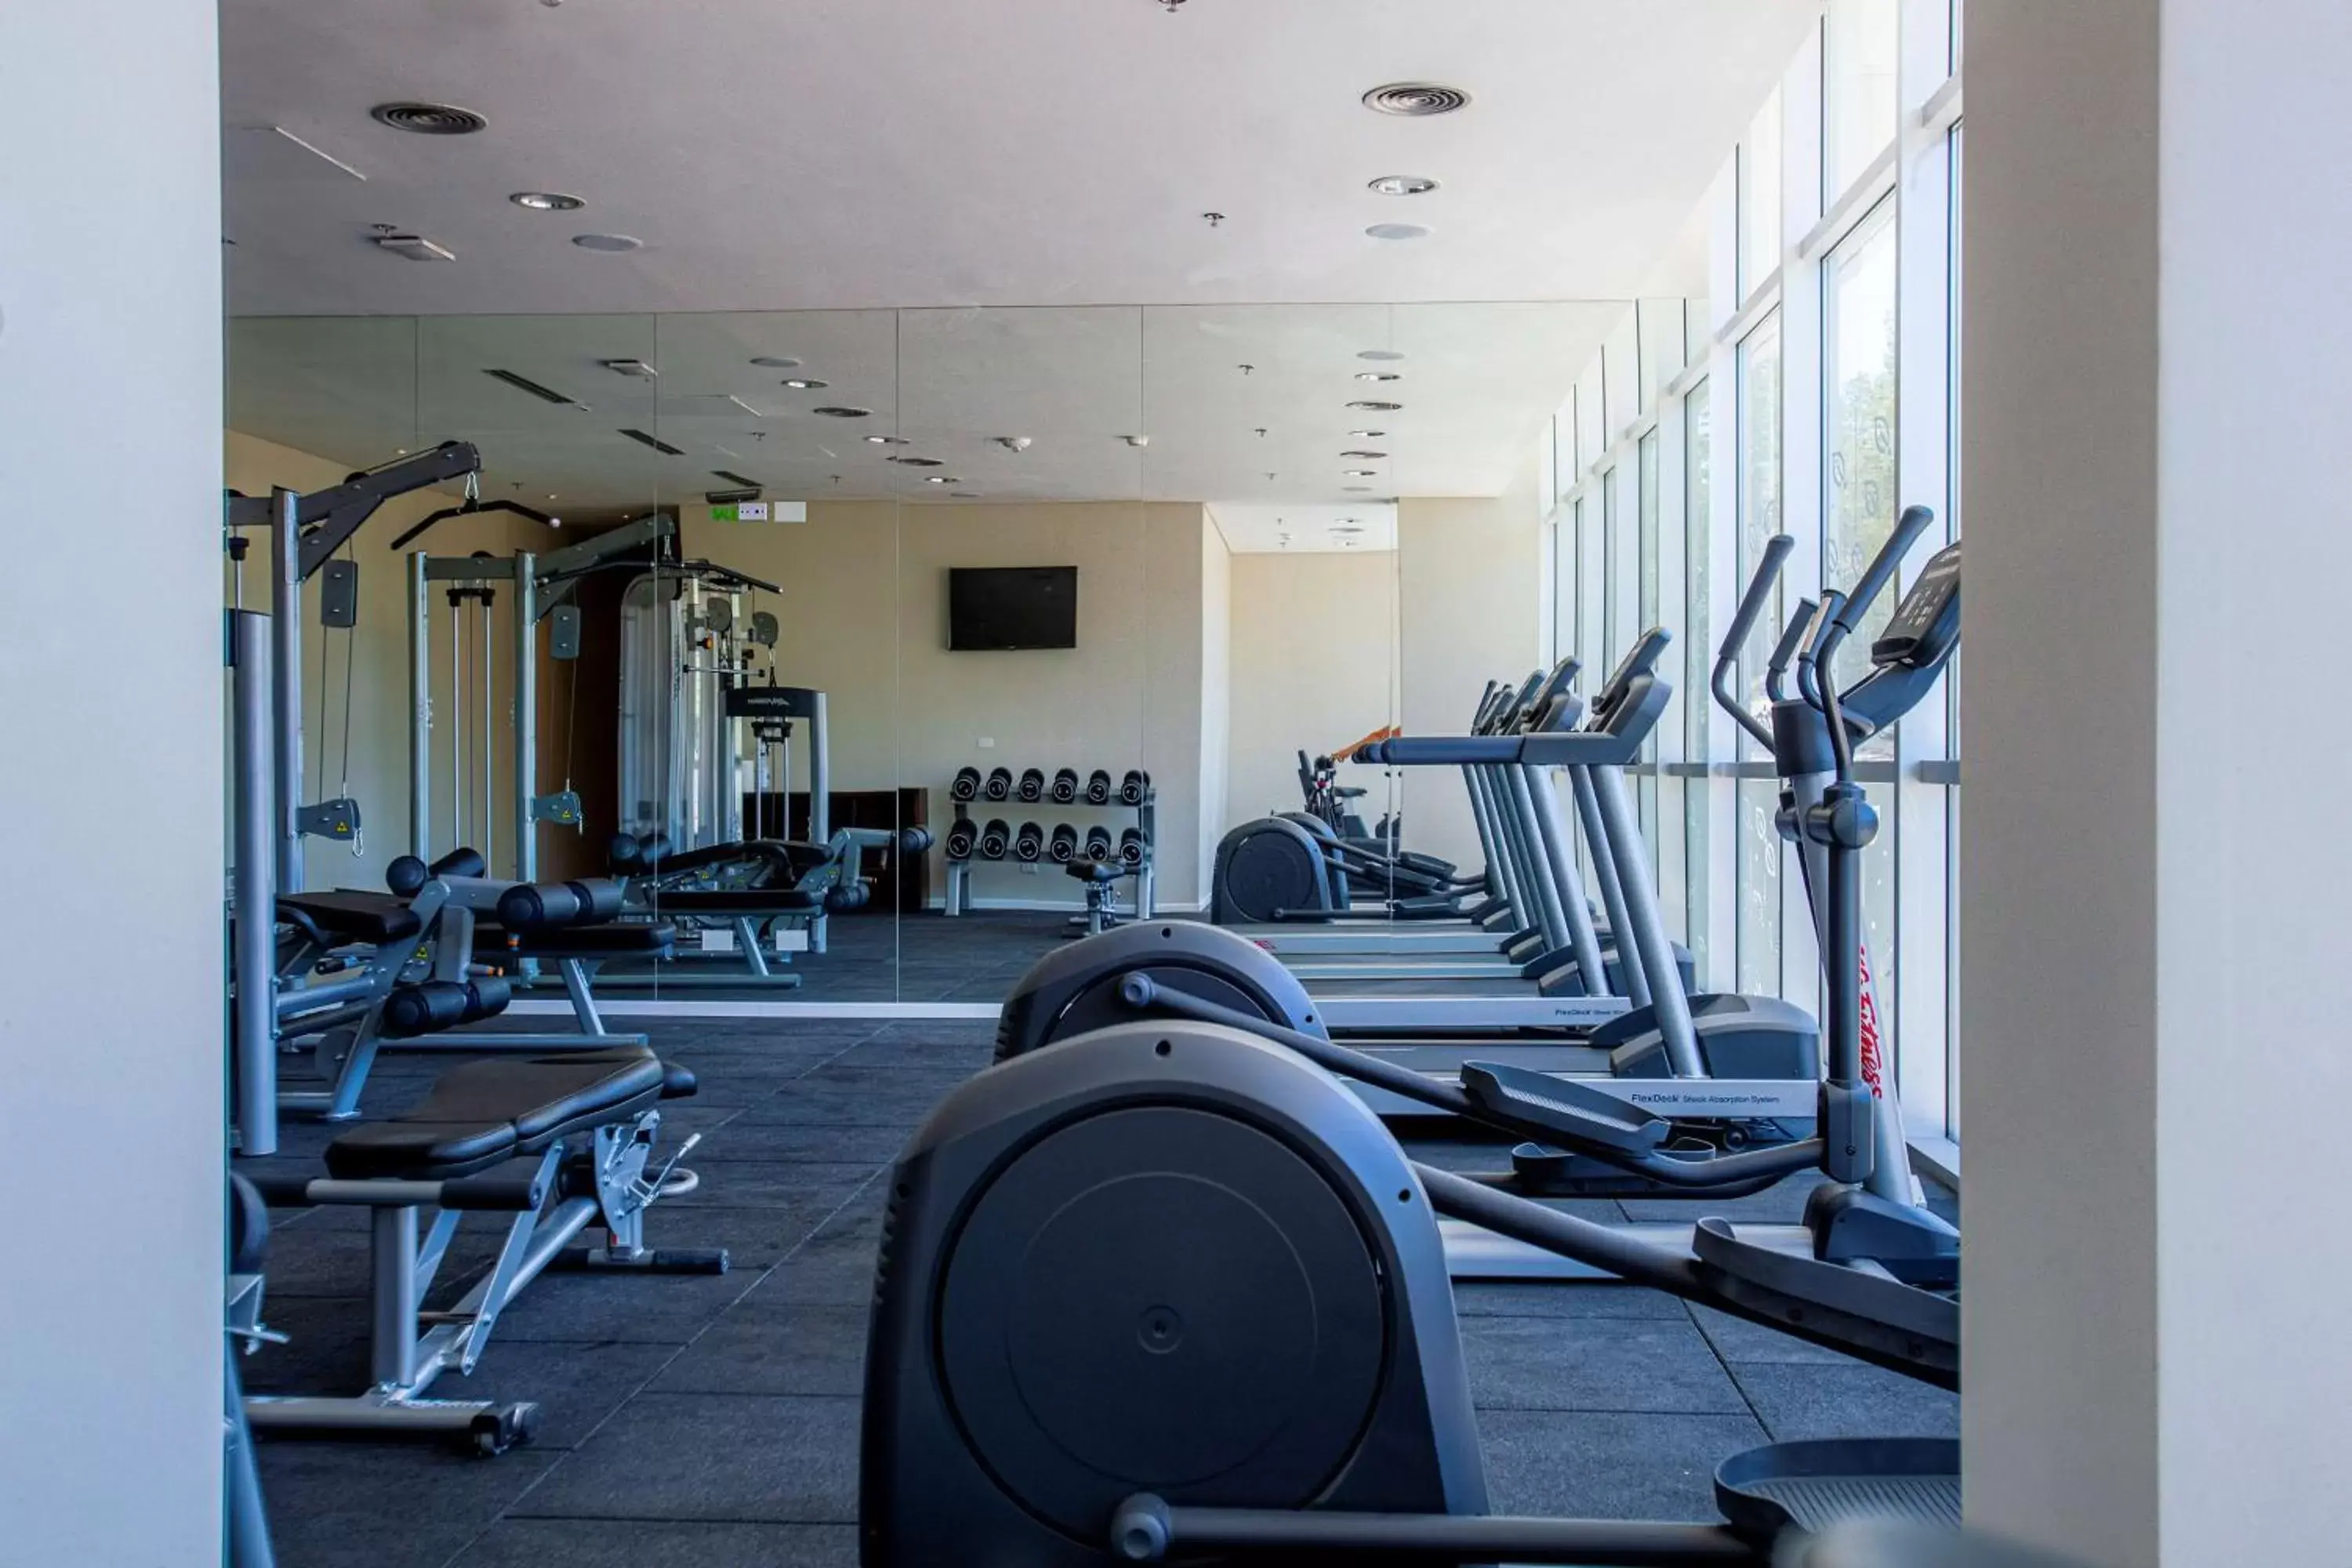 Fitness centre/facilities, Fitness Center/Facilities in Hilton Garden Inn Neuquen